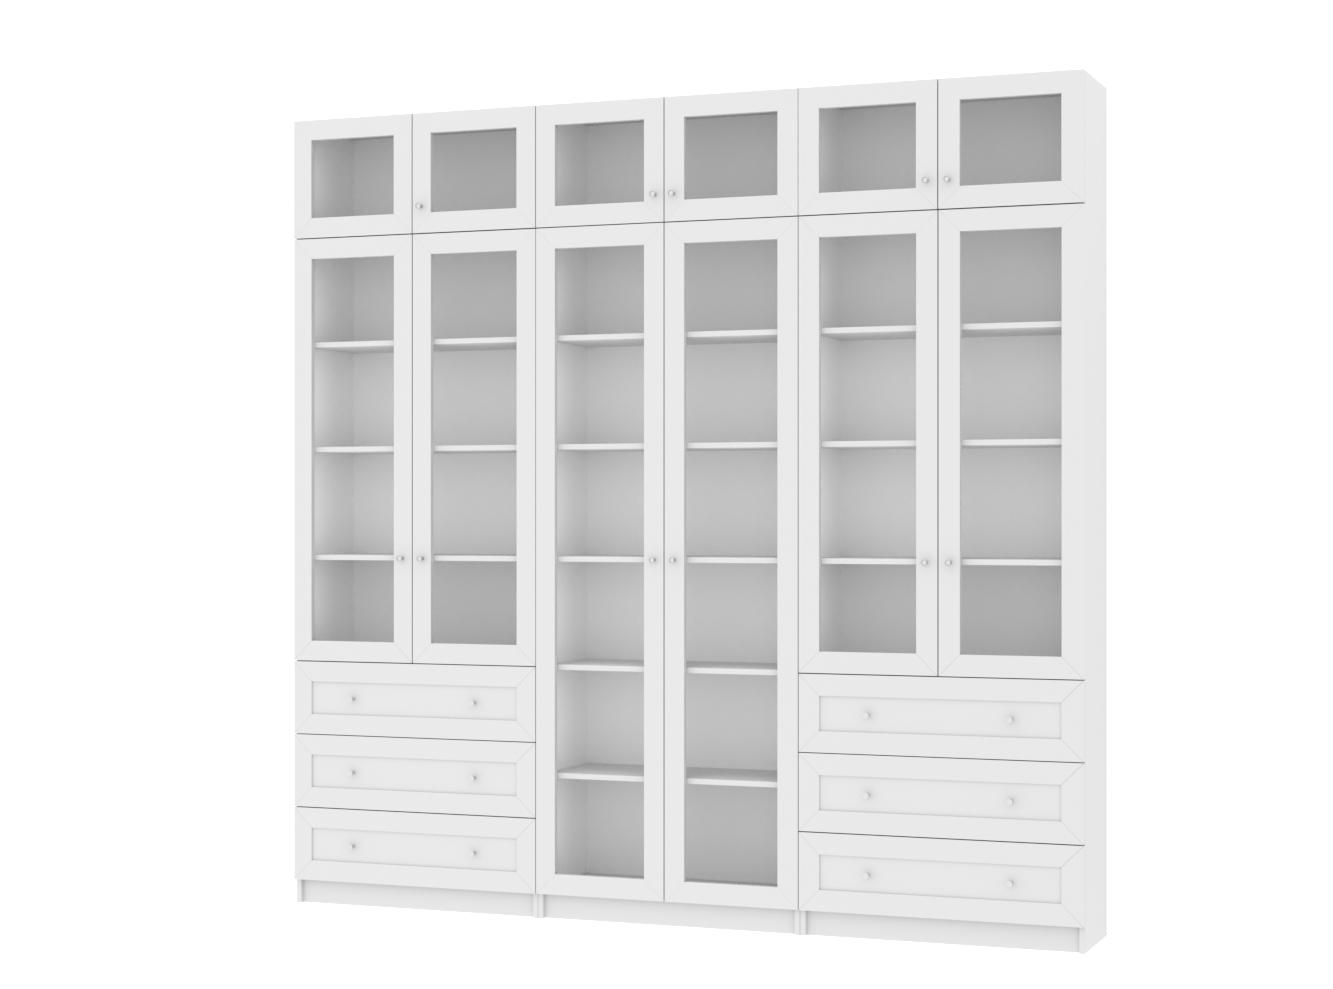 Книжный шкаф Билли 370 white ИКЕА (IKEA) изображение товара